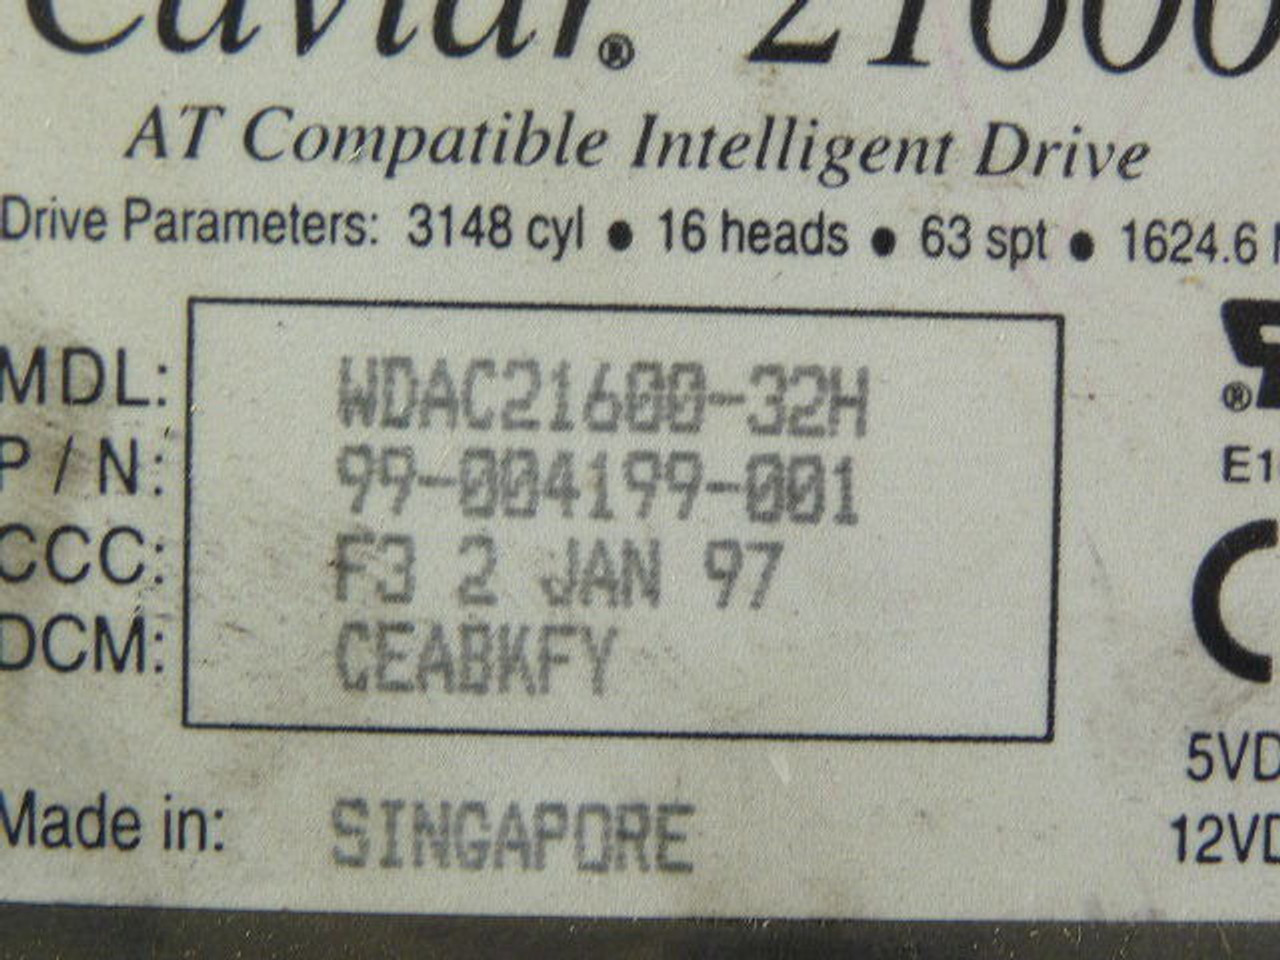 Western Digital WDAC21600-32H Caviar Hard Drive 1GB ATA/33 5200RPM 3.5" USED